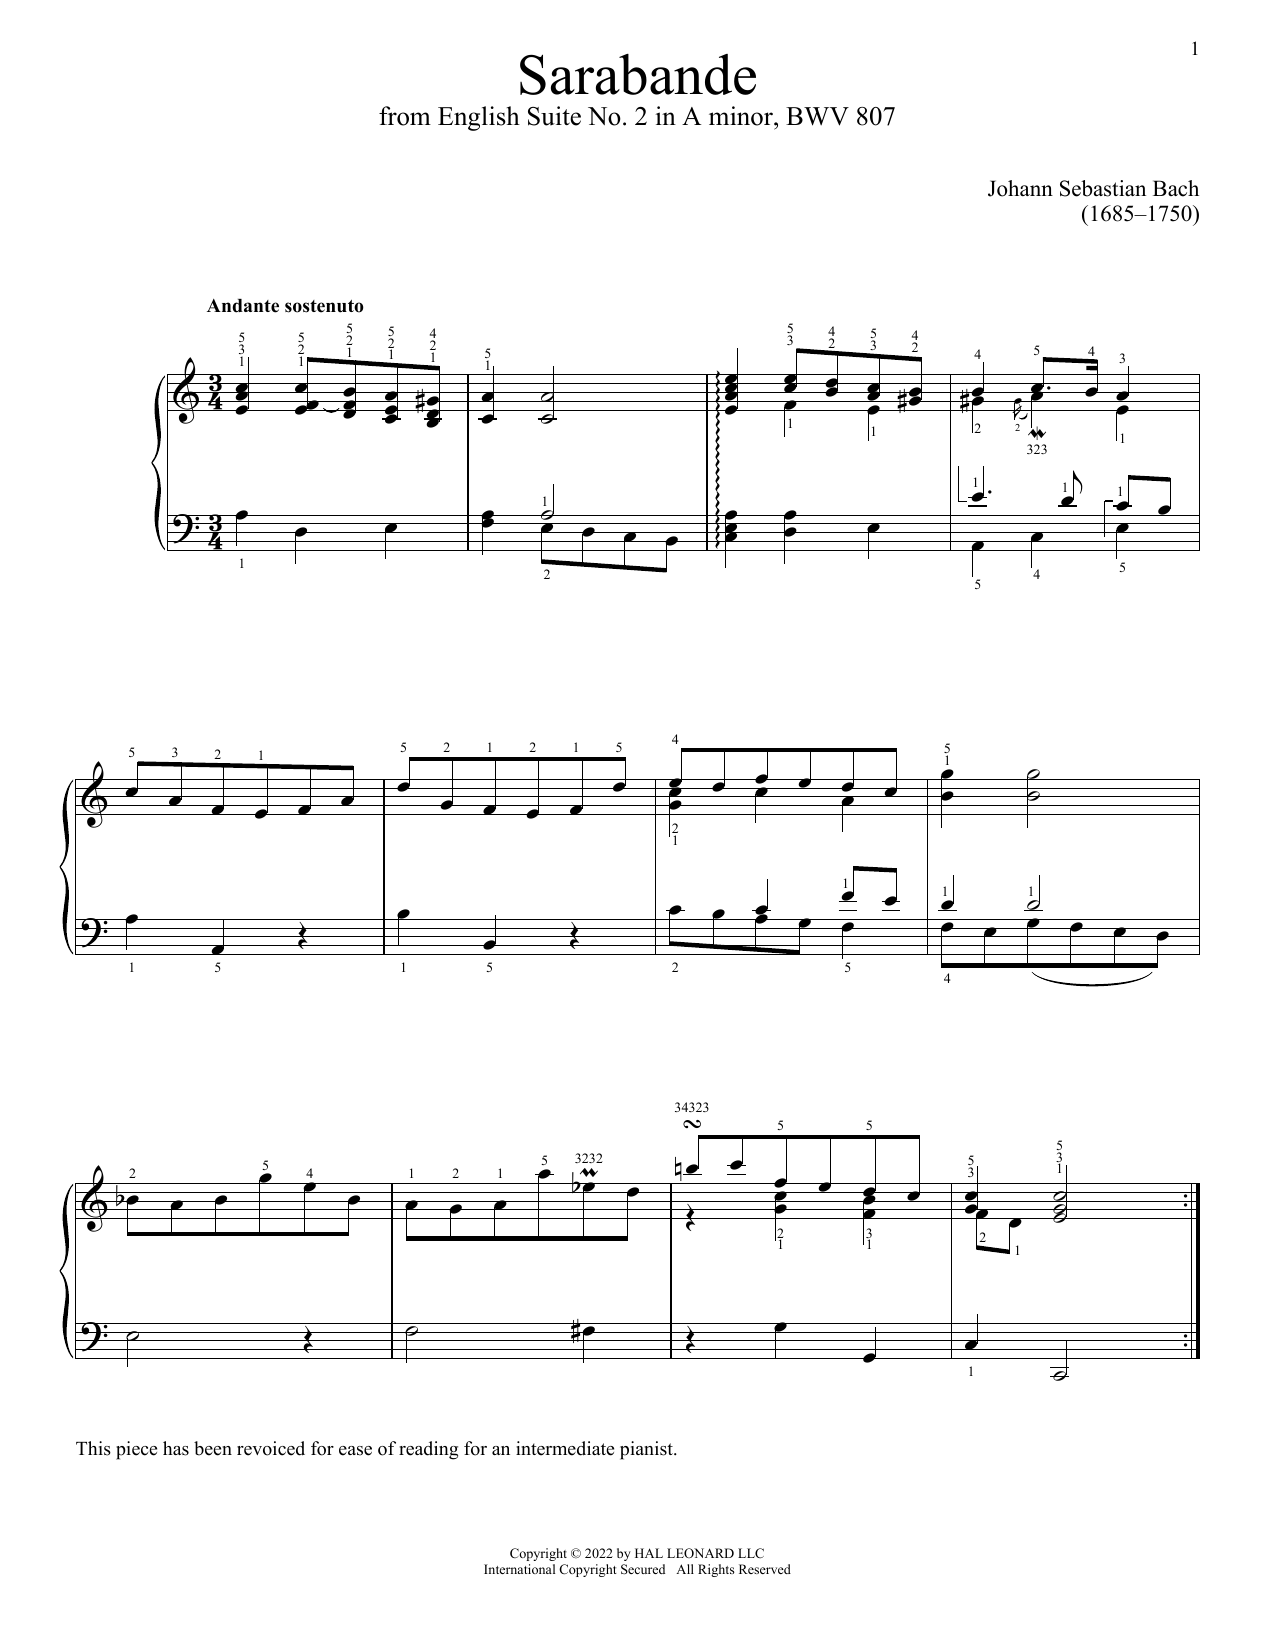 Johann Sebastian Bach Sarabande, BWV 807 Sheet Music Notes & Chords for Piano Solo - Download or Print PDF